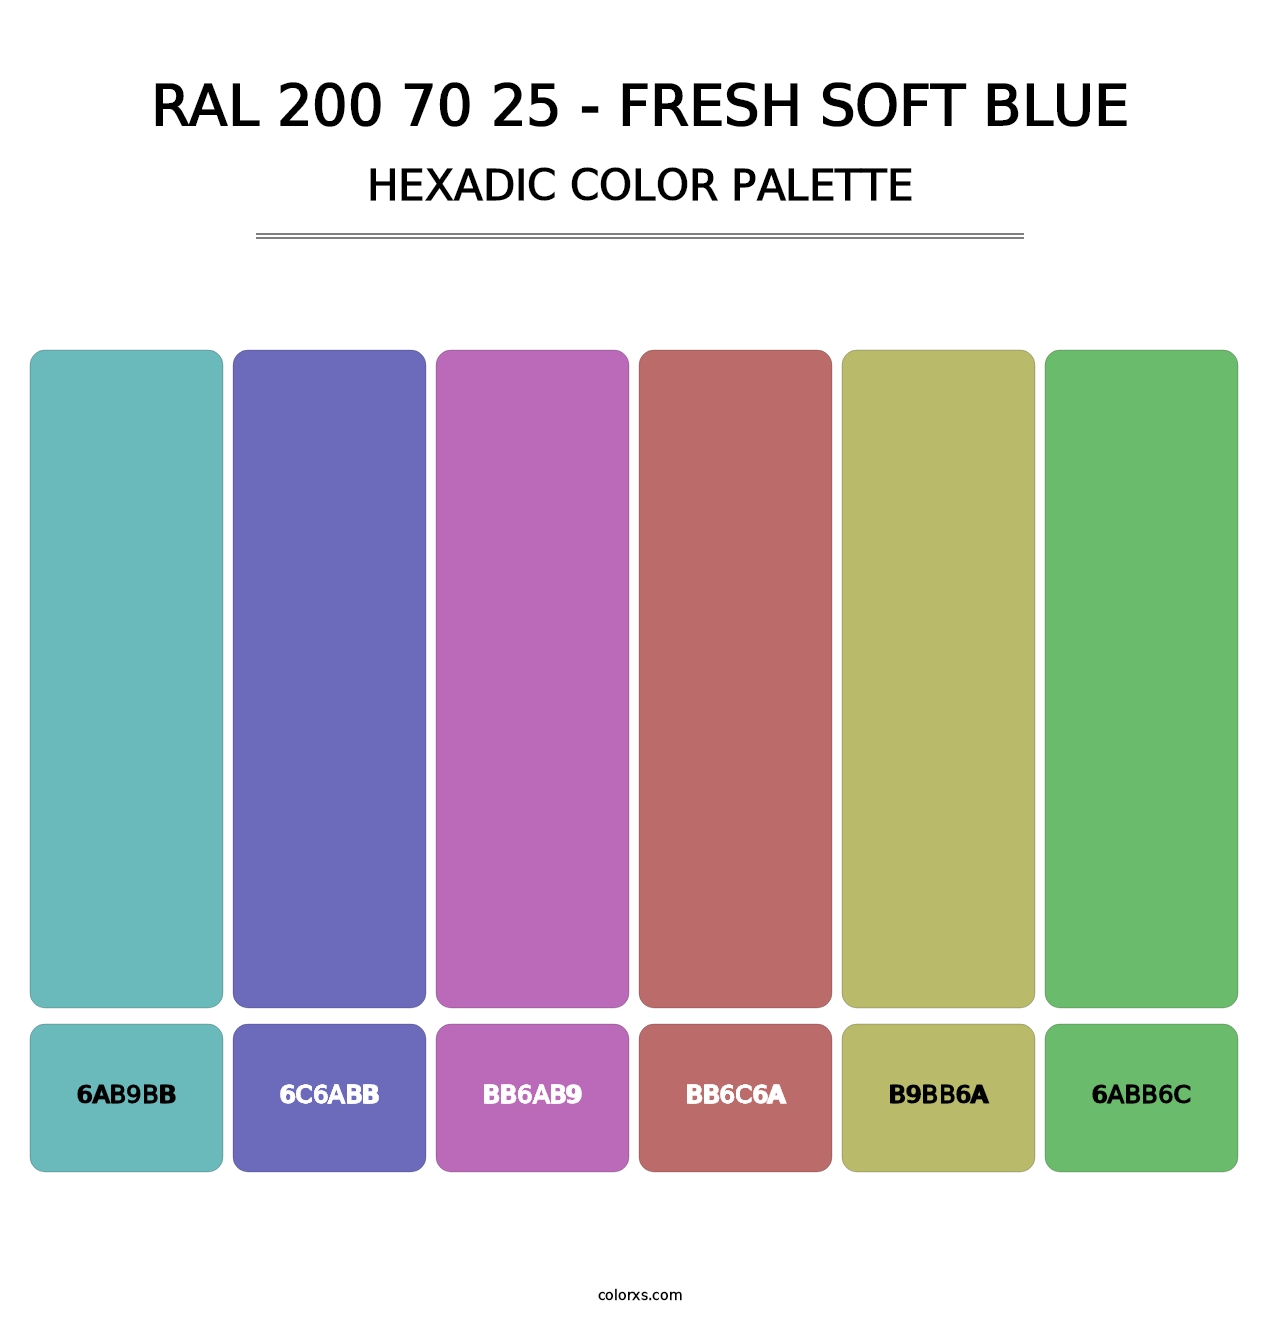 RAL 200 70 25 - Fresh Soft Blue - Hexadic Color Palette